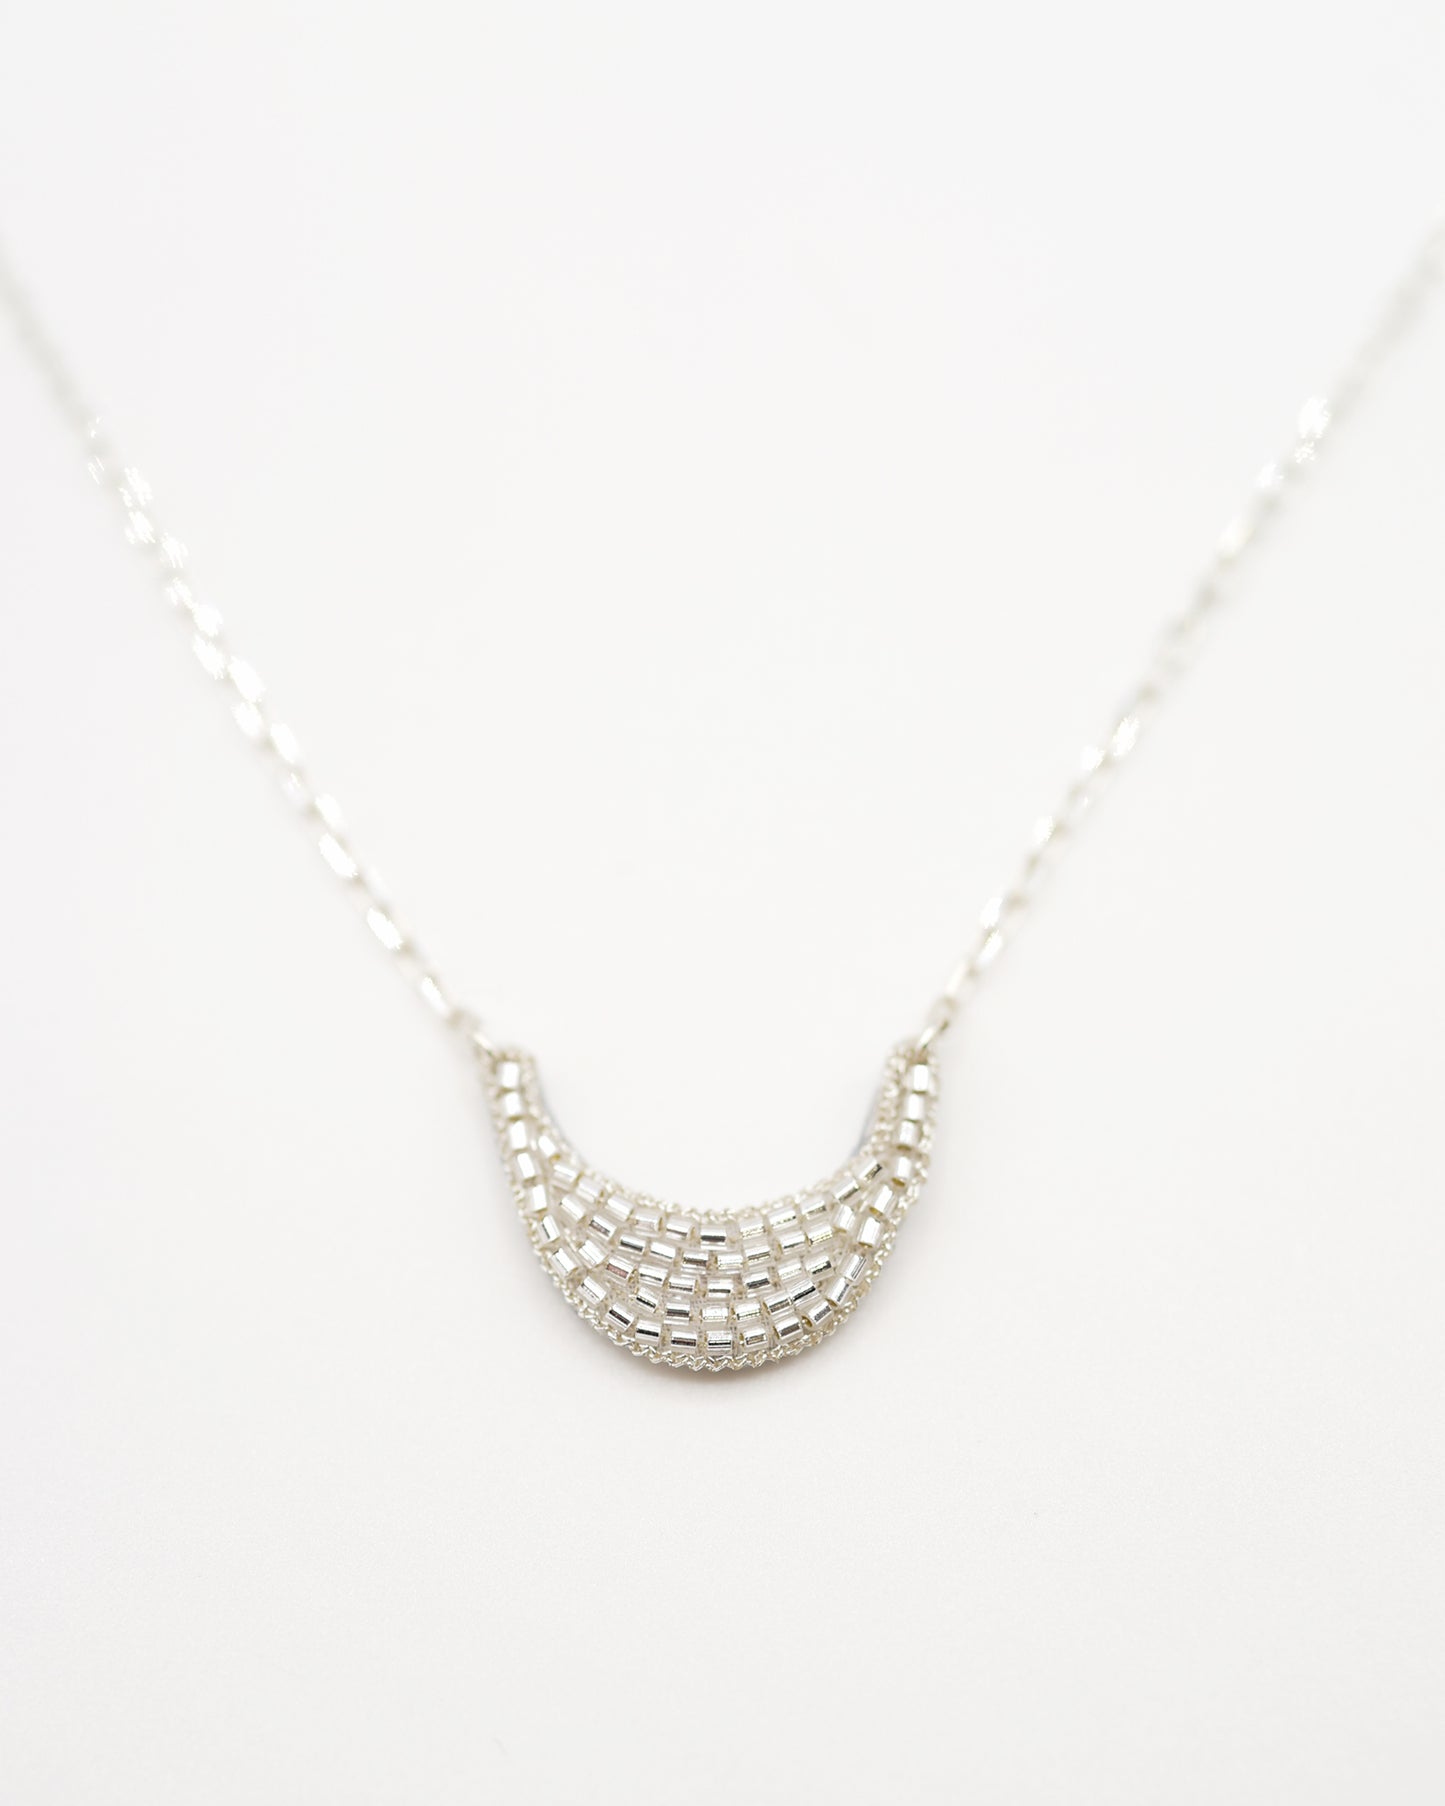 Silver moon necklace